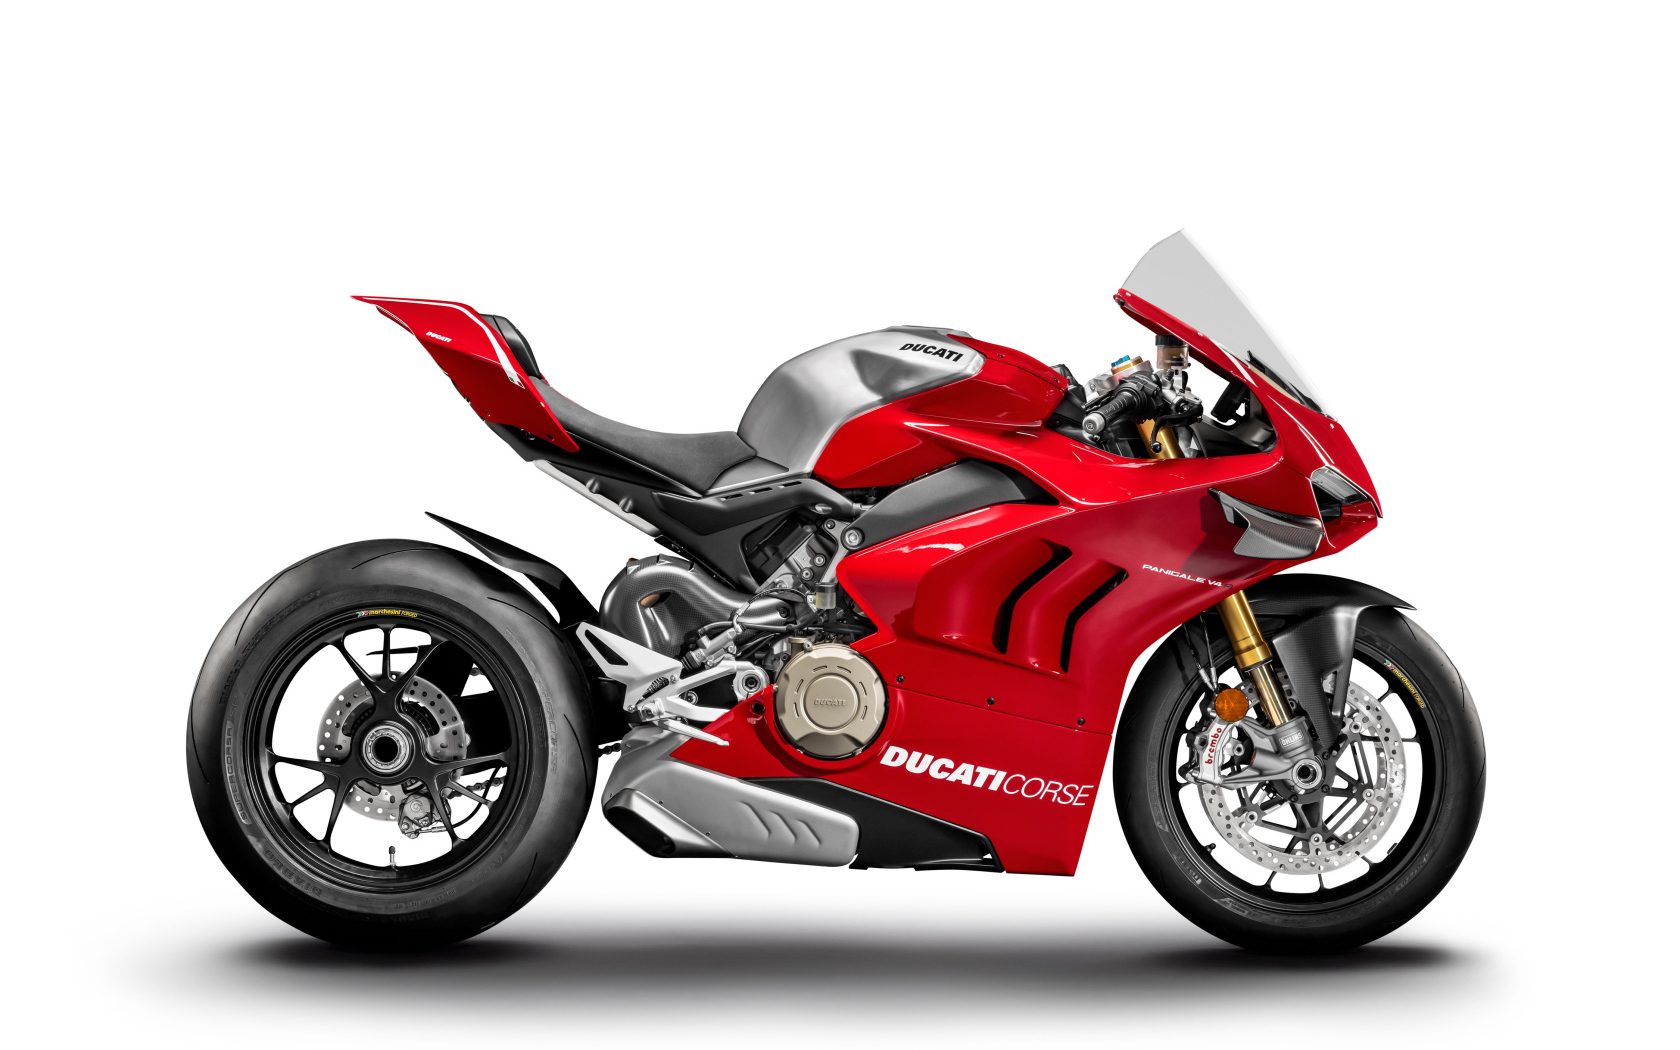 Красный мотоцикл Ducati Panigale V4 на белом фоне